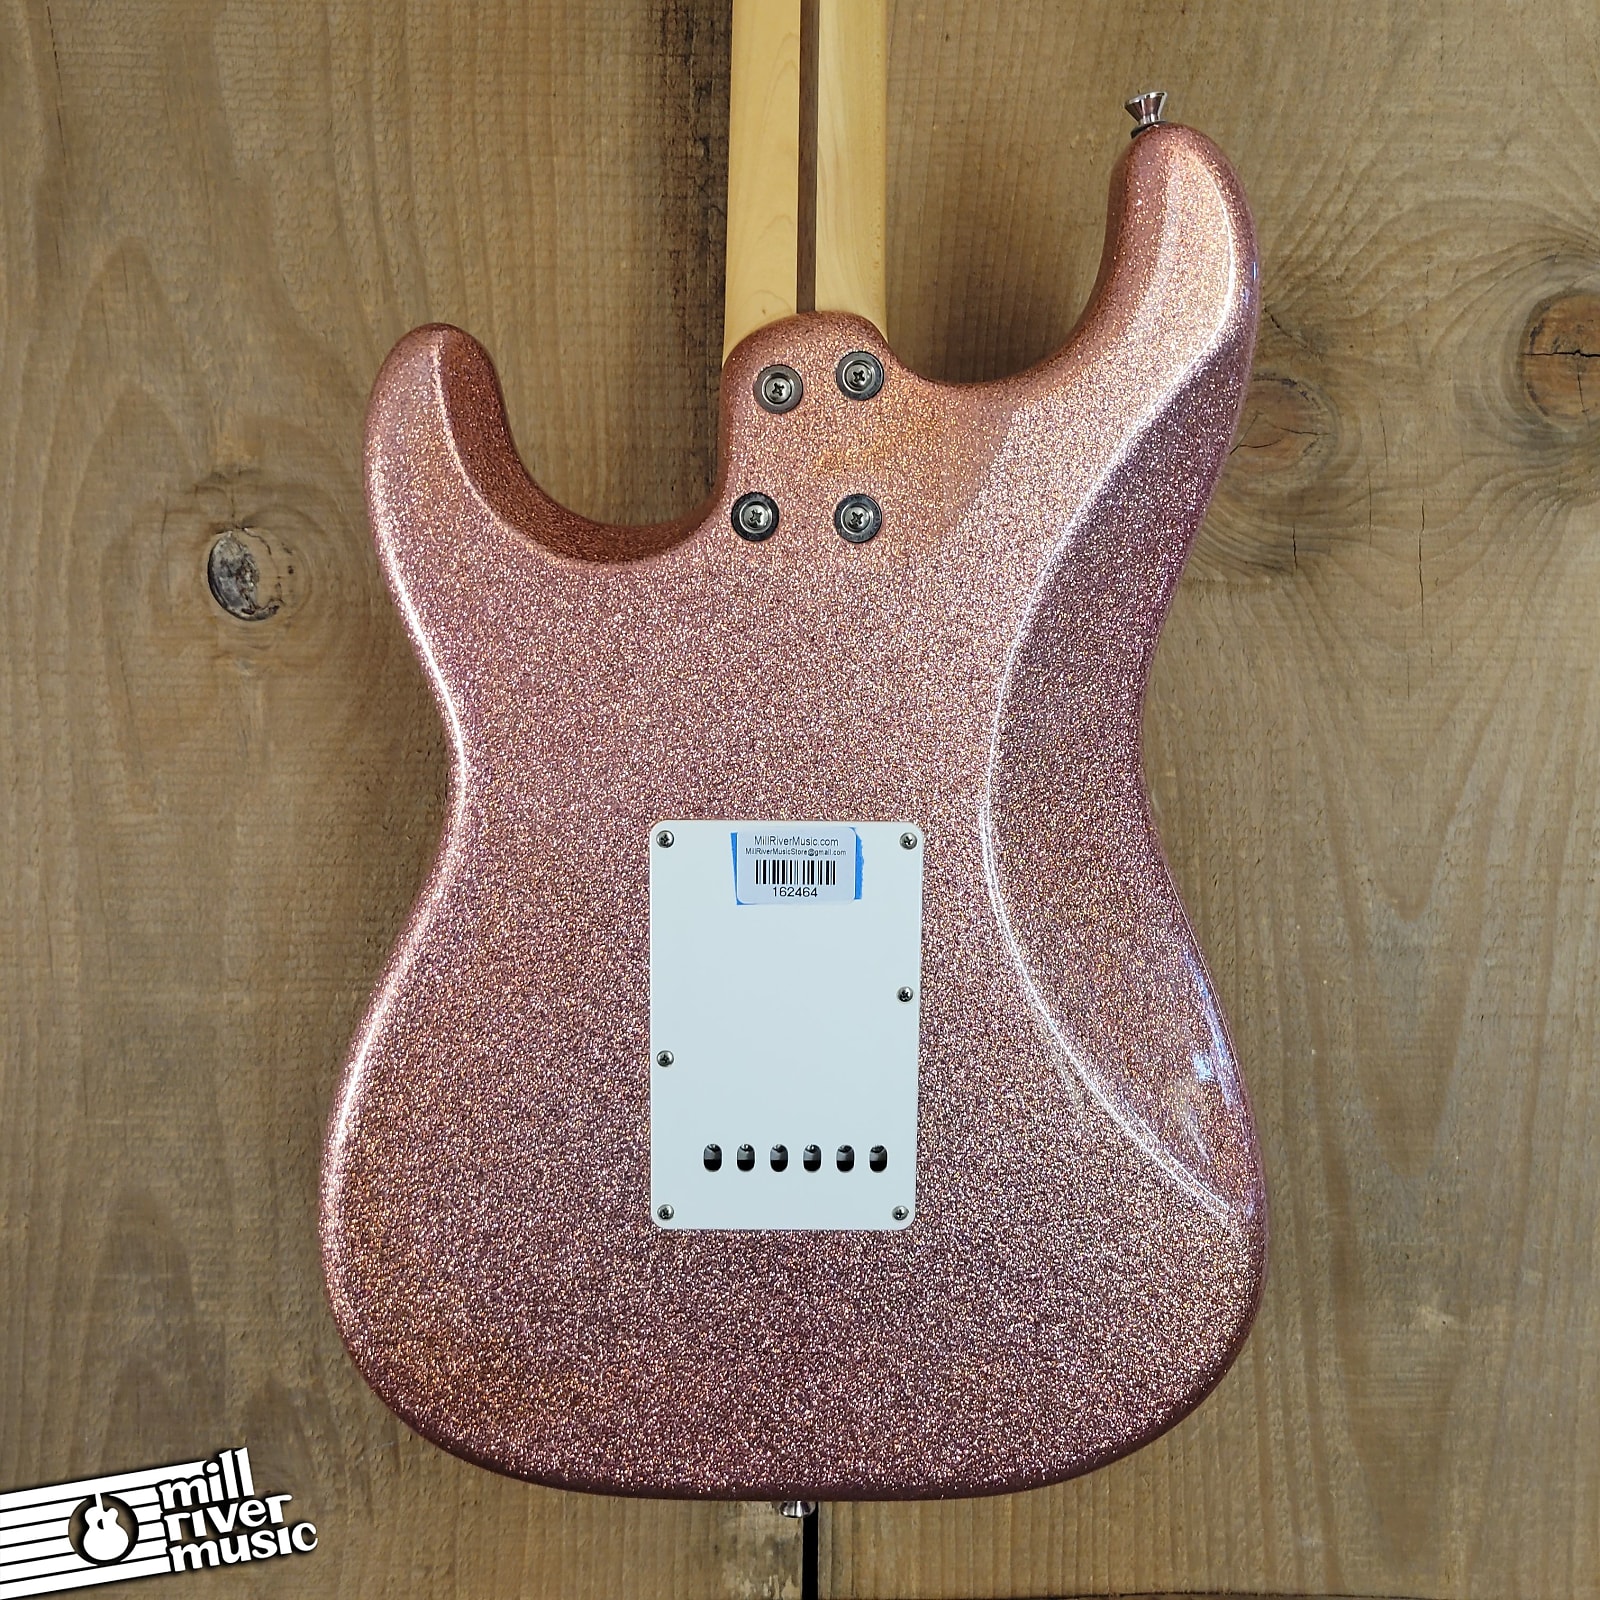 ESP Custom Shop HSS Electric Guitar MIJ 2012 Pink Sparkle w/ SKB Case